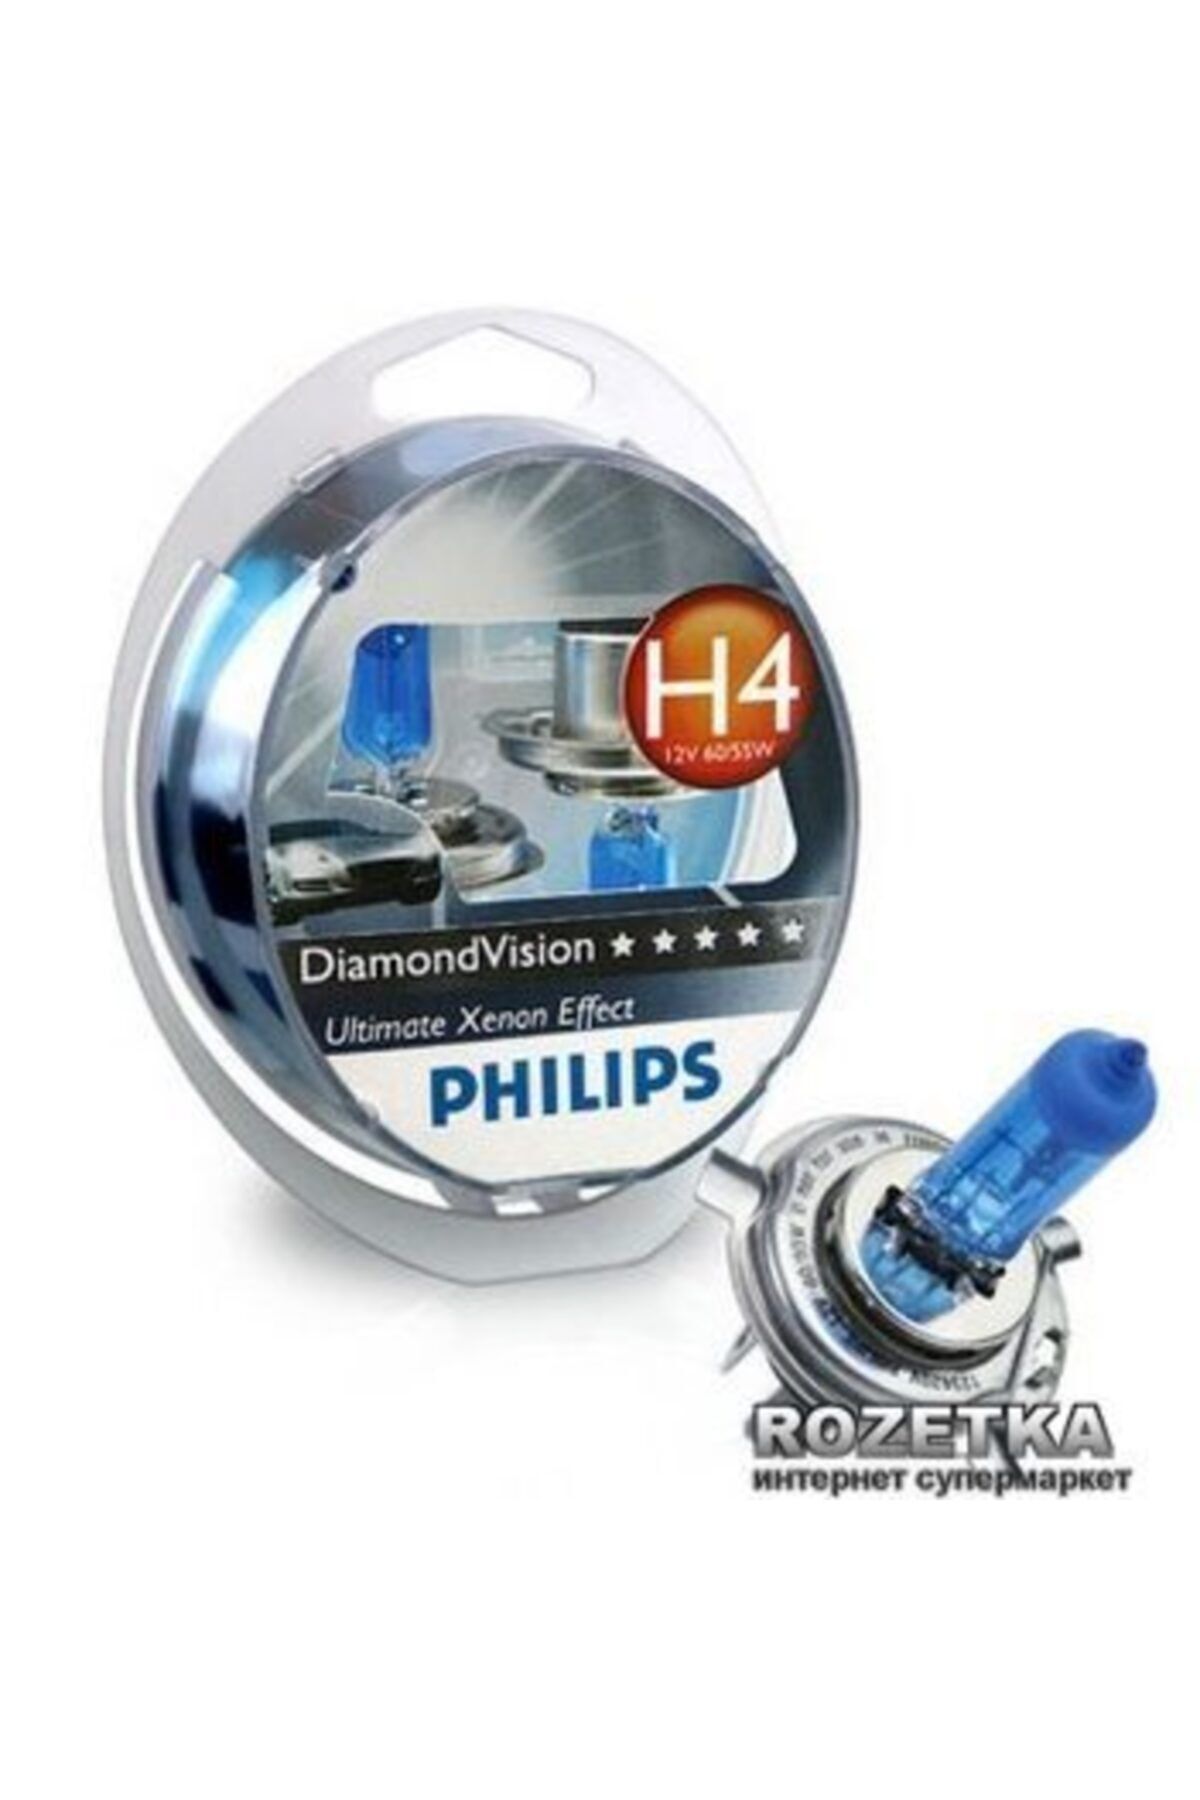 Philips vision купить. Лампы Philips h4 55\60w-12v Diamond Vision 5000k. Philips 12v h4 60/55w Diamond Vision. Philips DIAMONDVISION h4 12v 60/55w 2шт. Лампа автомобильная Philips h4 12v 60/55w 5000k DIAMONDVISION 12342dv.